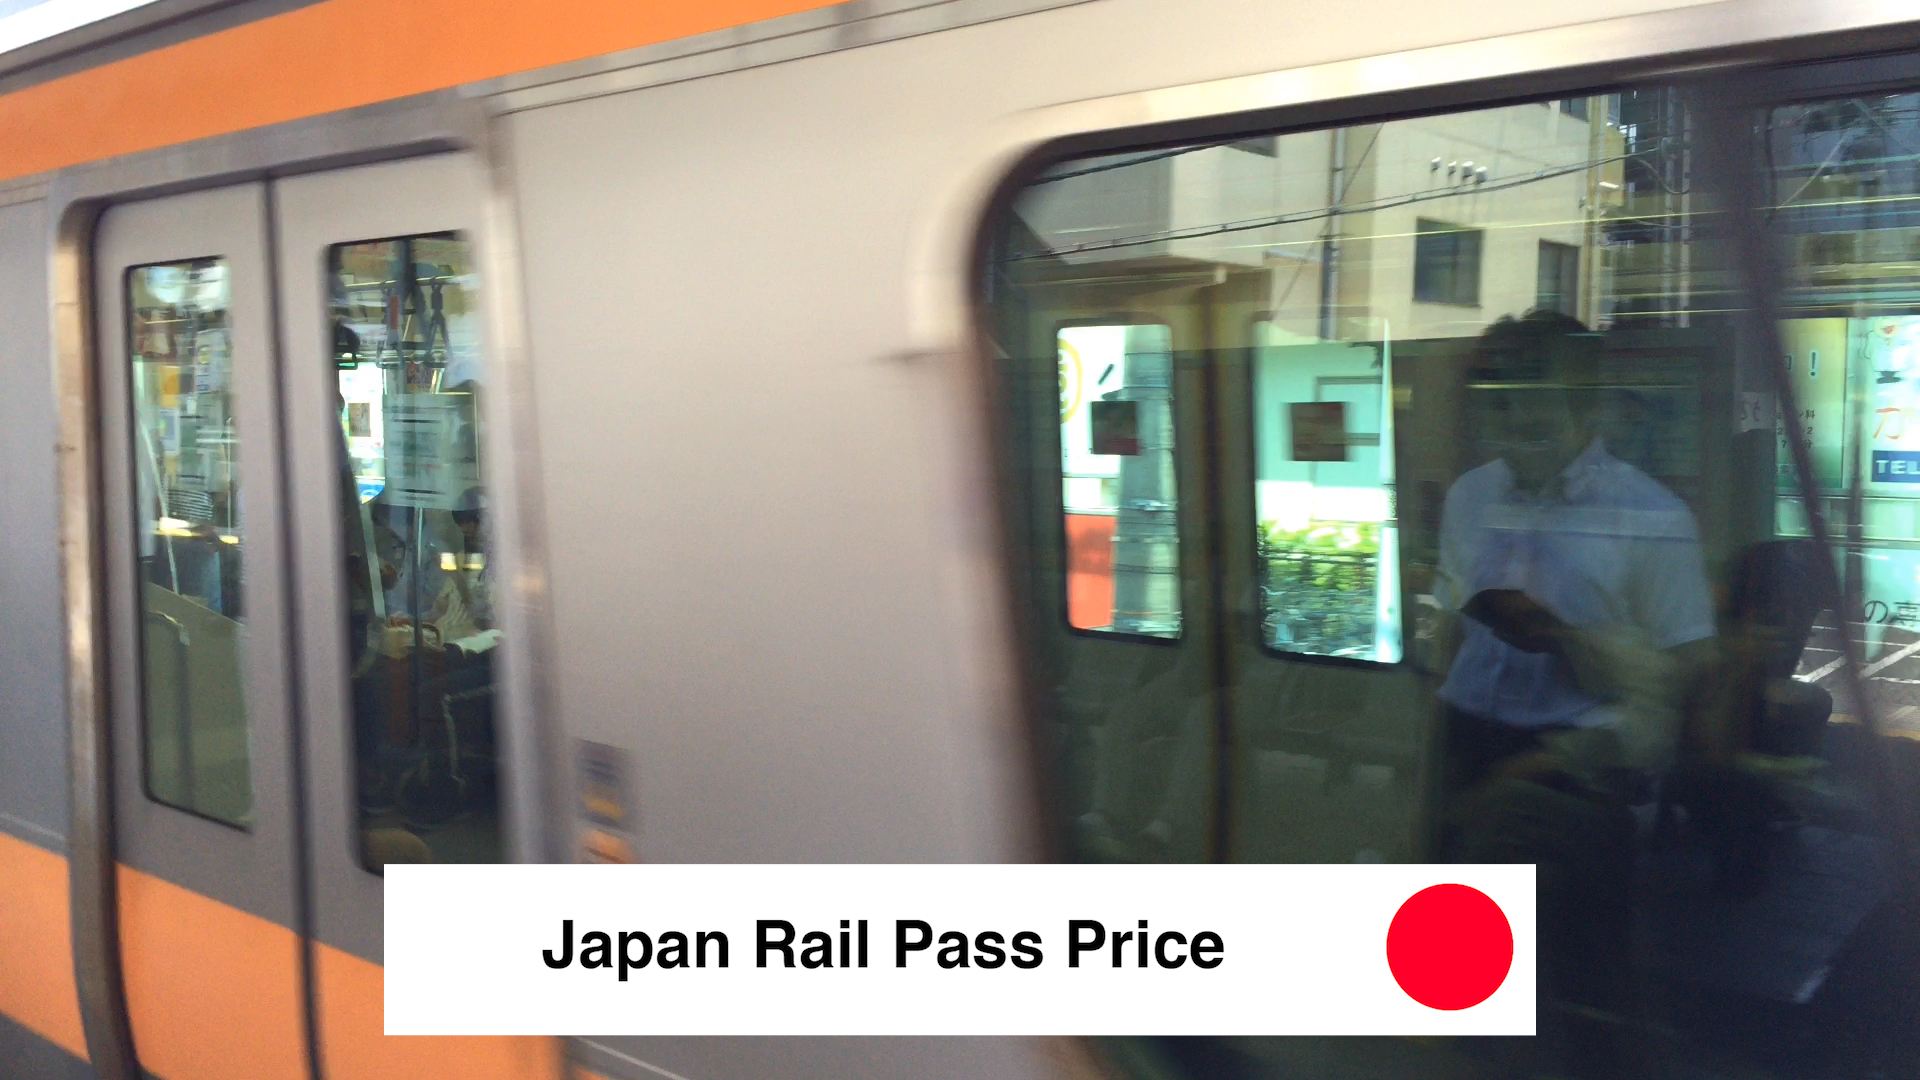 Japan Rail Pass Price - How To Use Japan Rail Pass - Where To Buy Japan Rail Pass How To Use JR Pass In Tokyo. JR Pass Price